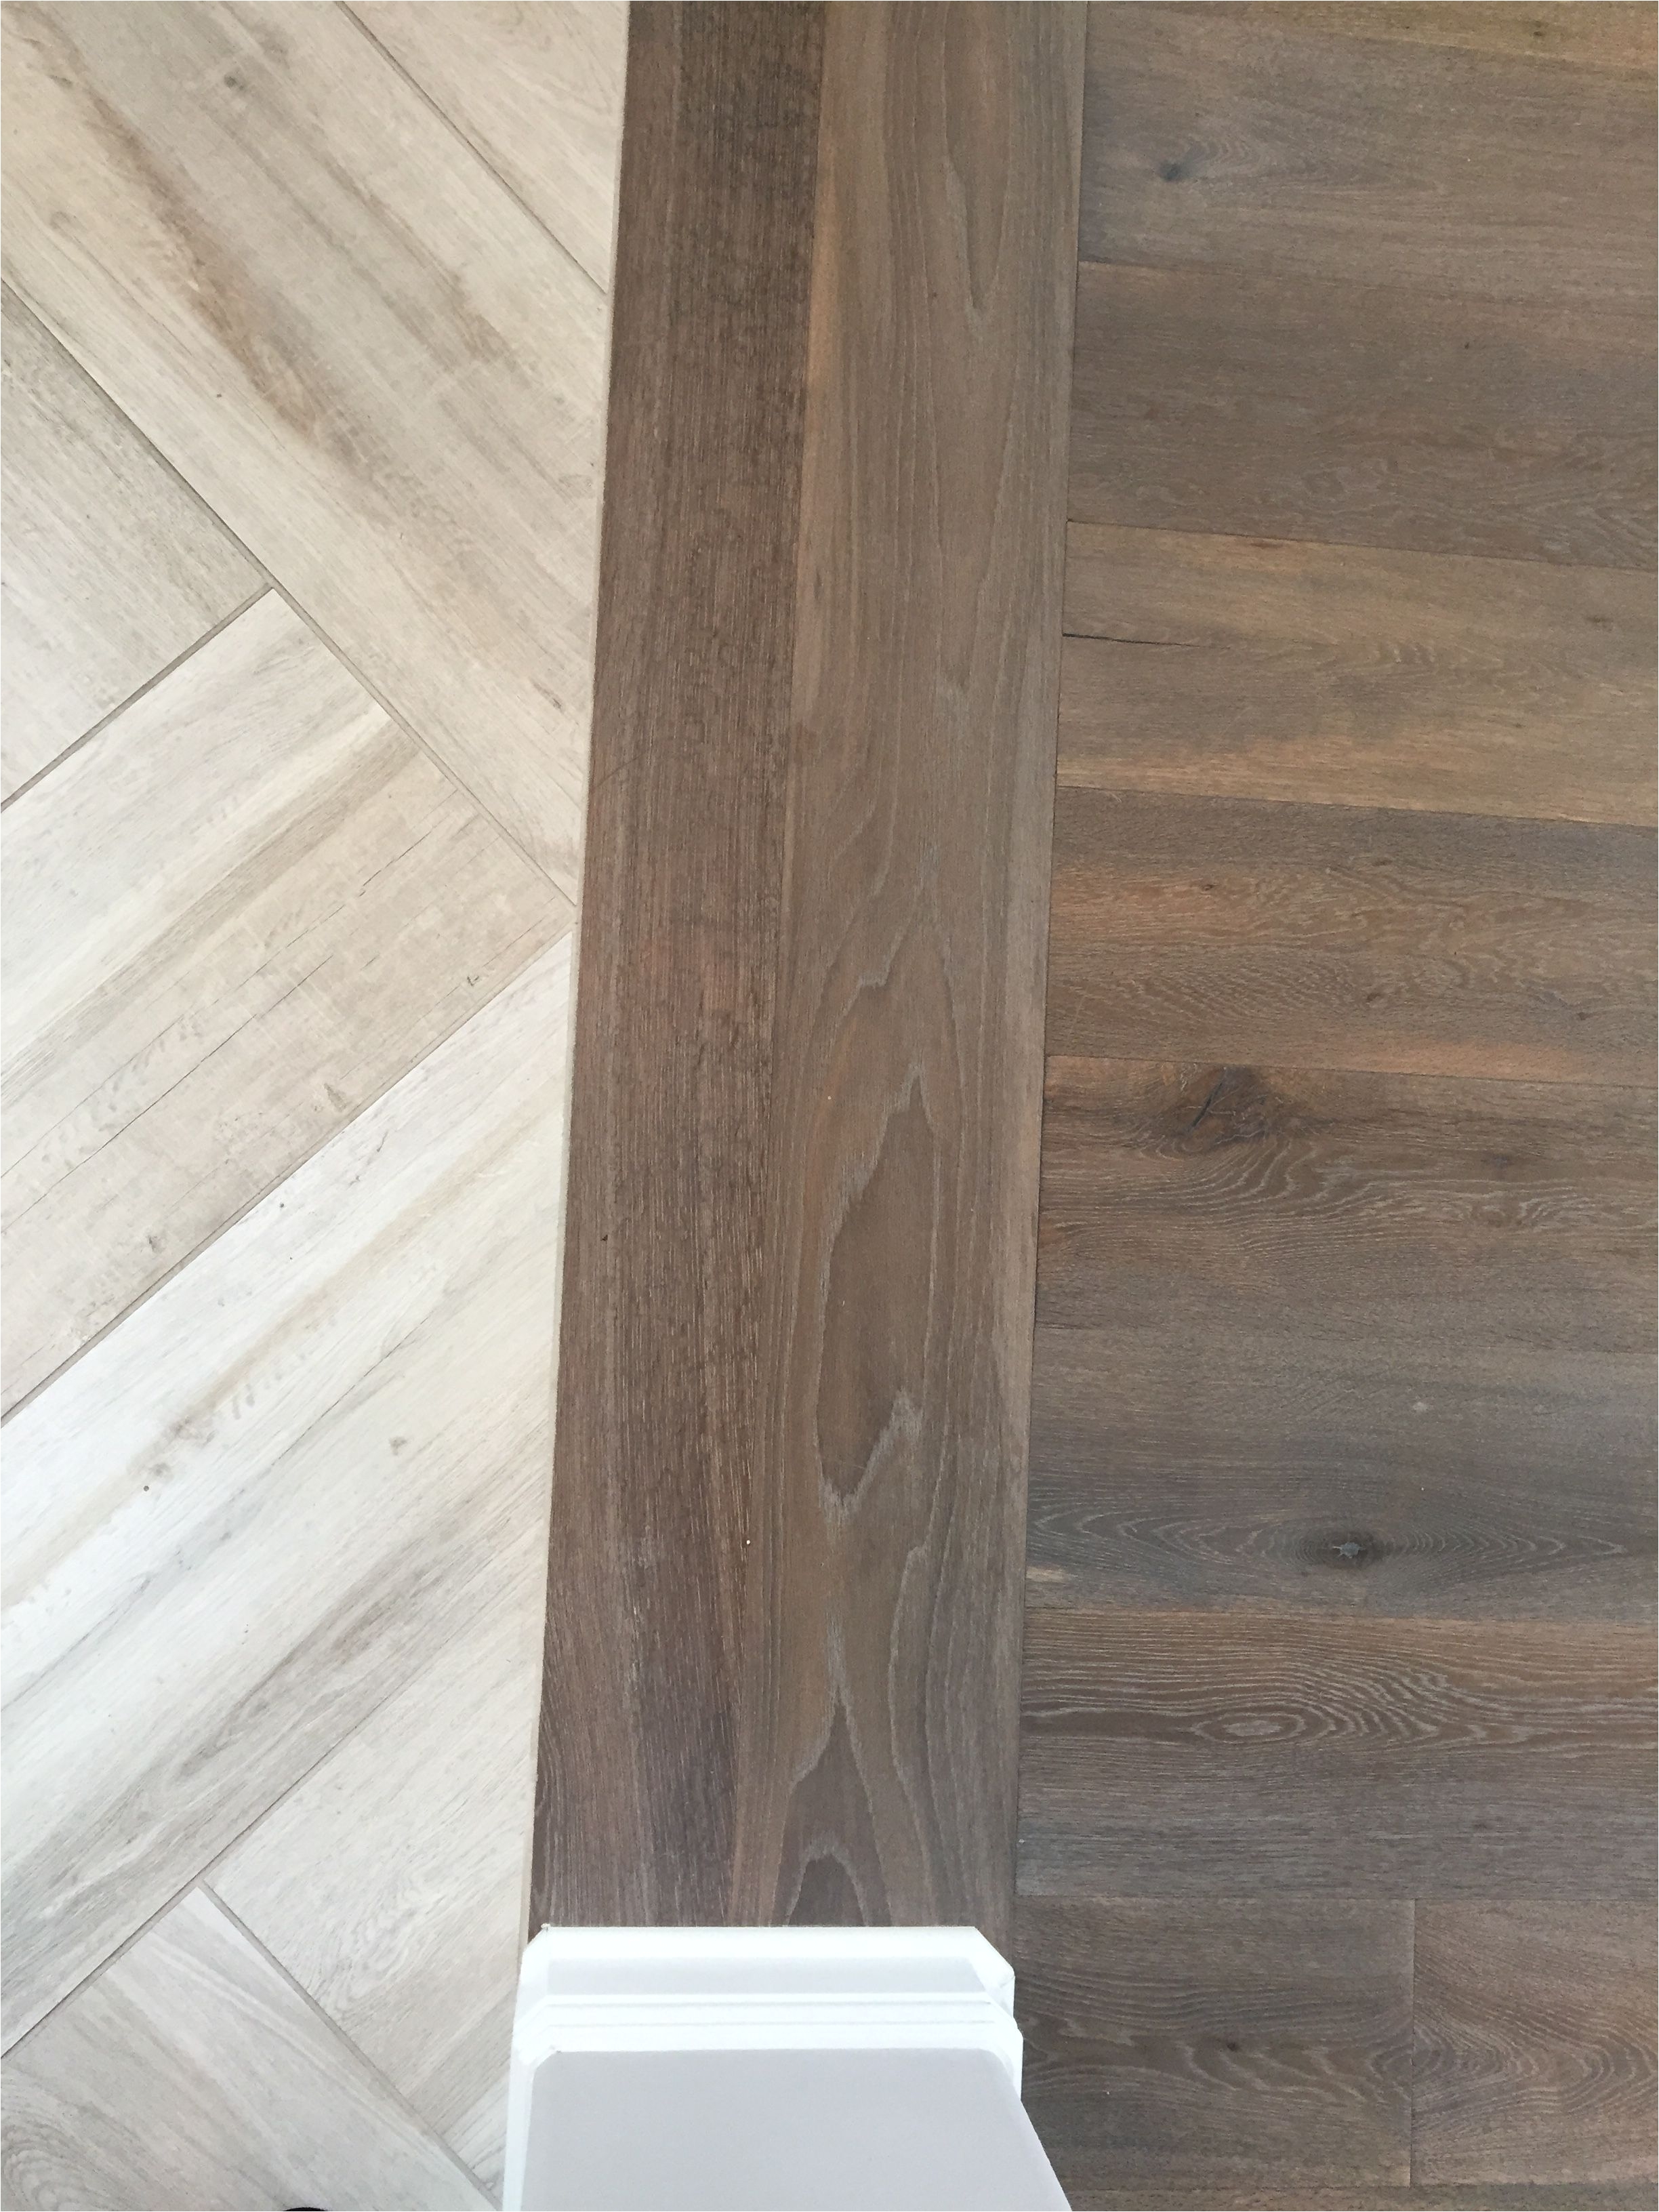 Snap On Tile Flooring Floor Transition Laminate to Herringbone Tile Pattern Model